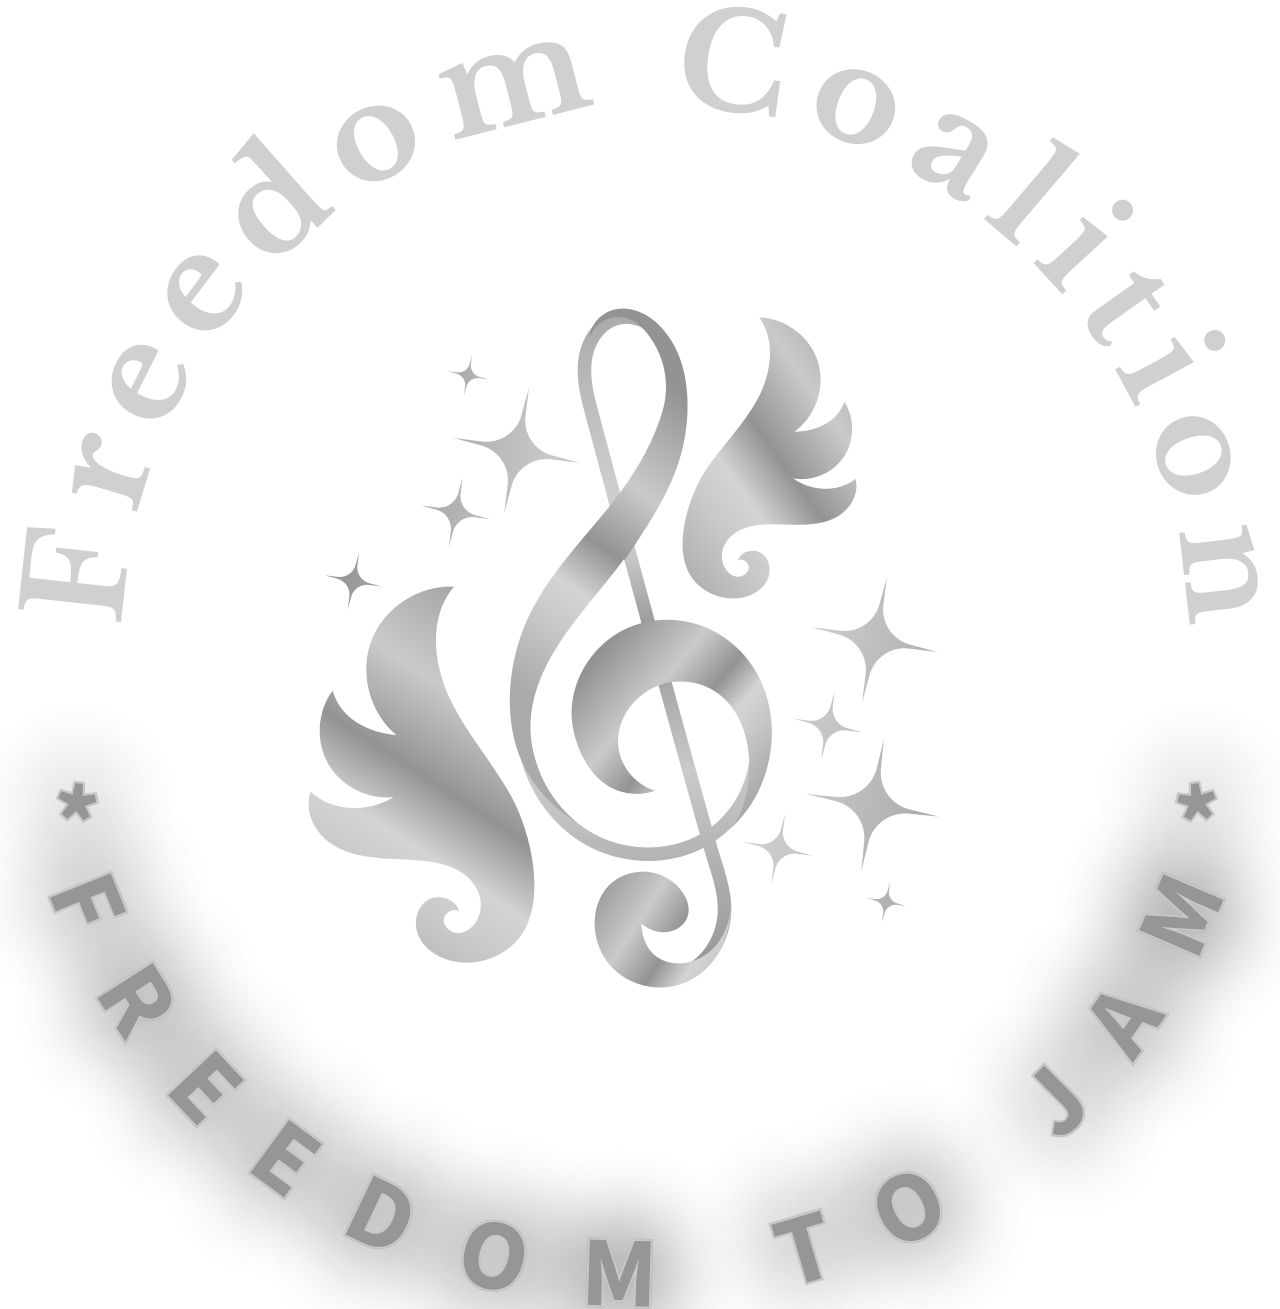 Freedom Coalition's logo